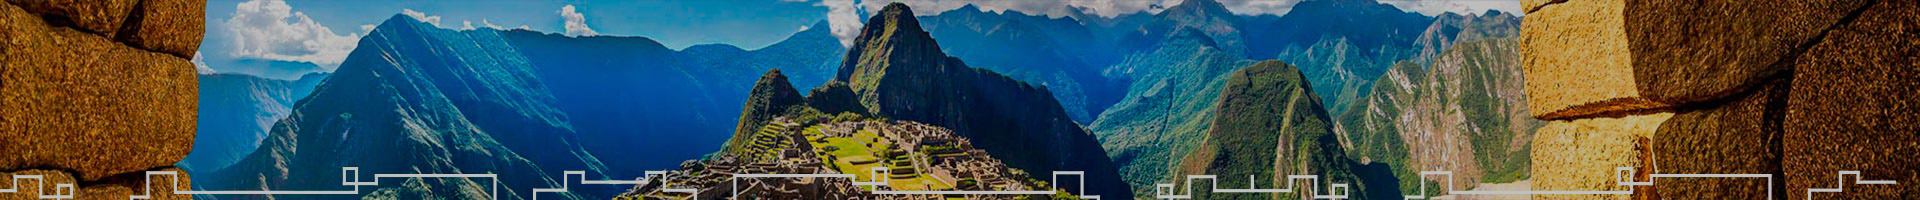  Lares Trek to Machu Picchu 4D